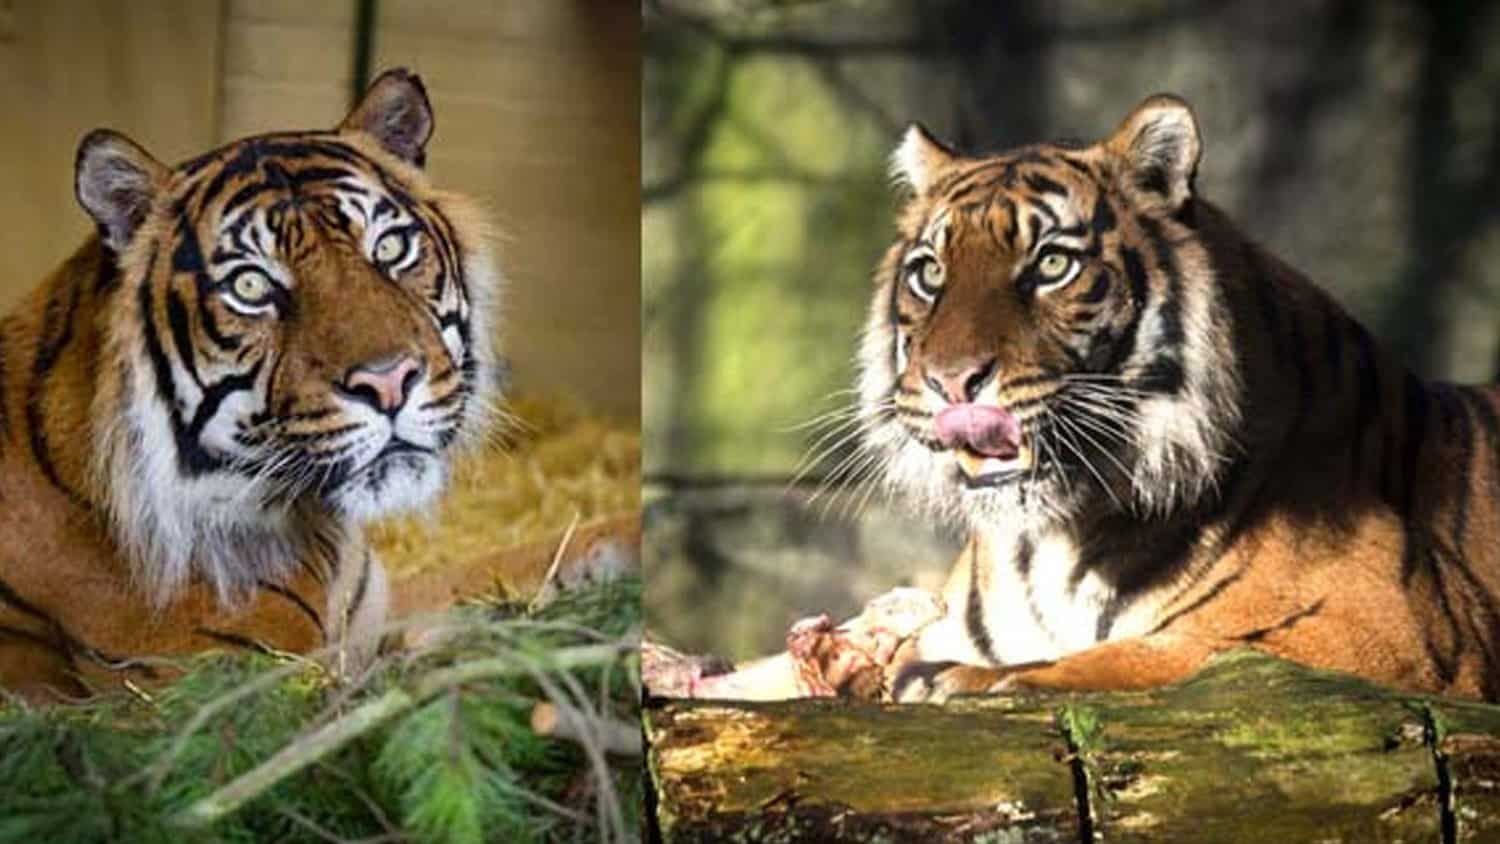 Baginda & Jambi, Tiger Tracks Exhibit at Edinburgh Zoo